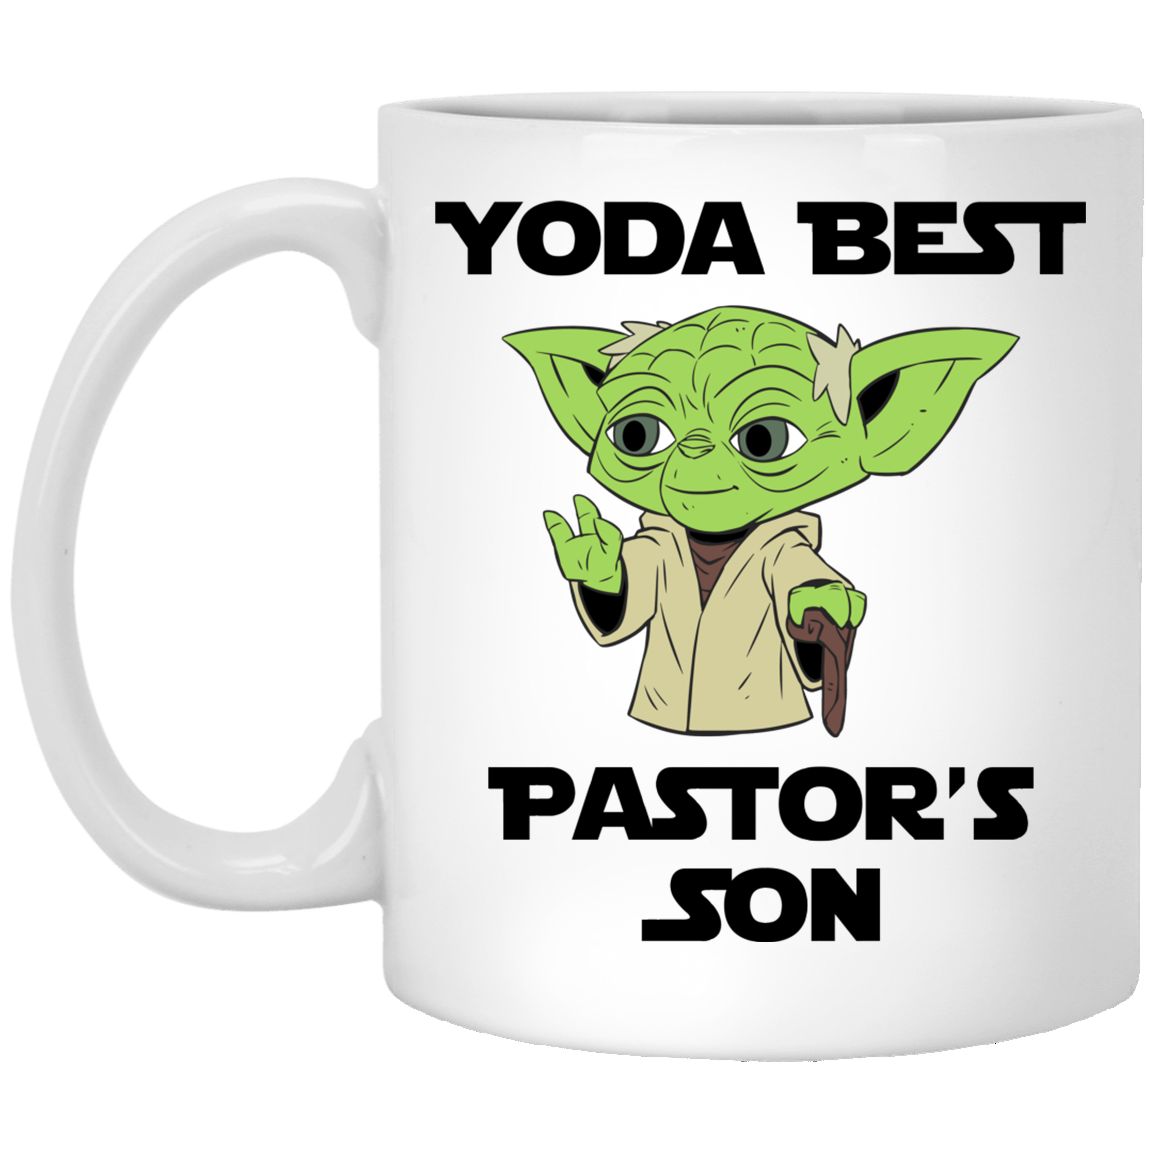 Yoda Best Pastor's Son Mug